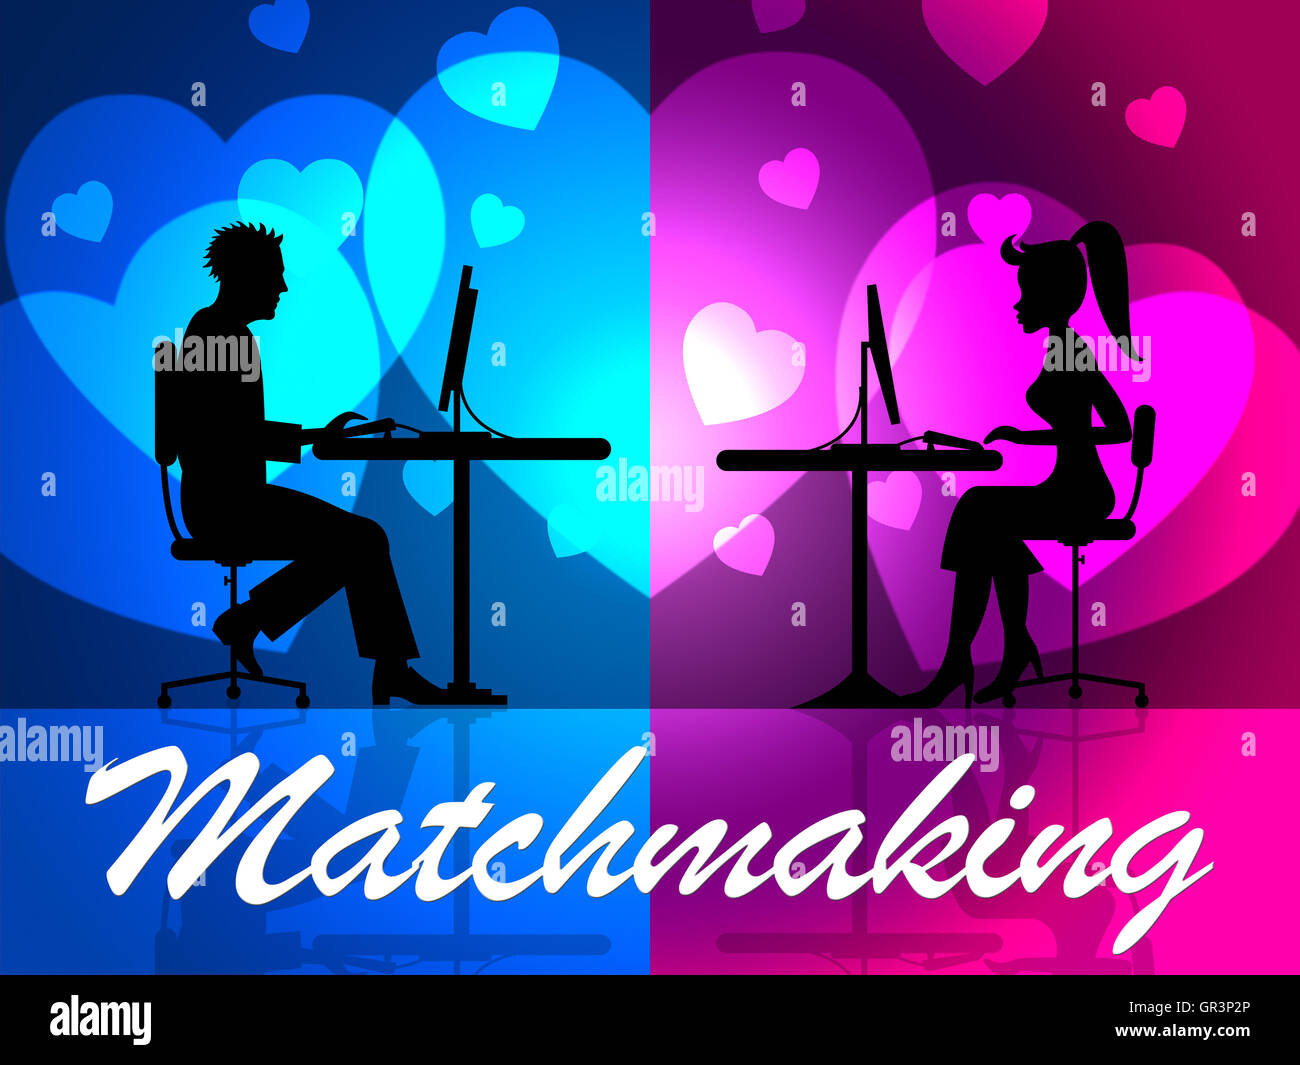 matchmaking bedeutung